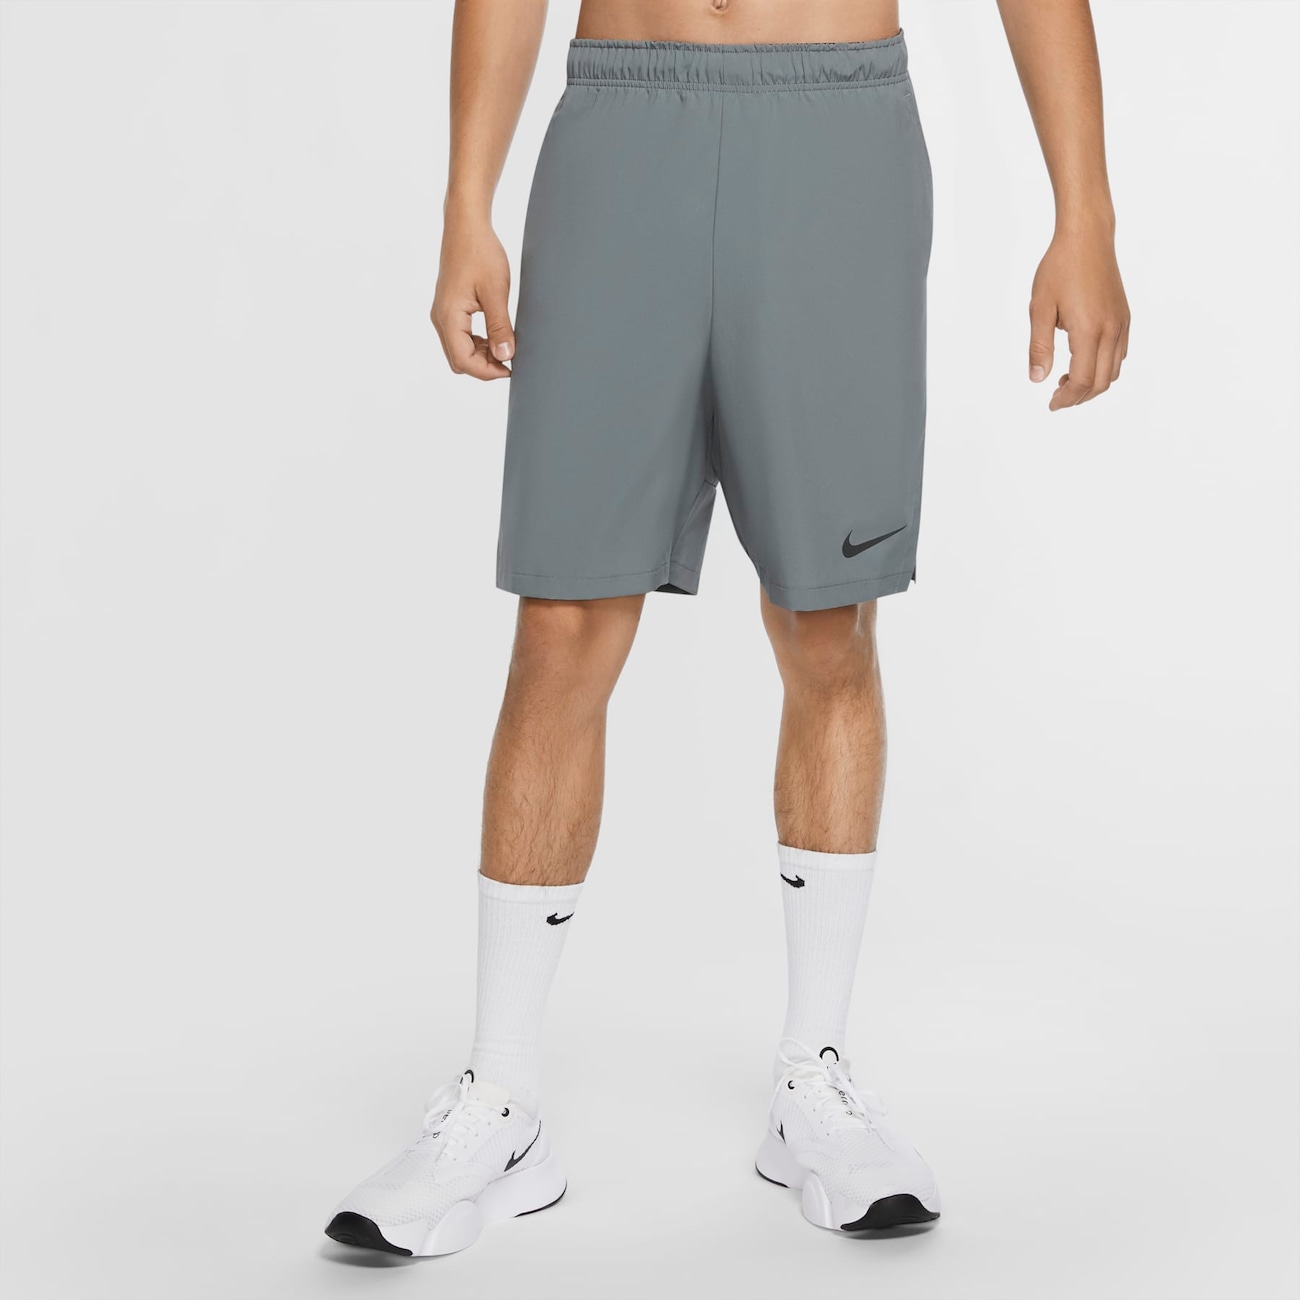 Shorts Nike Flex Masculino - Foto 1